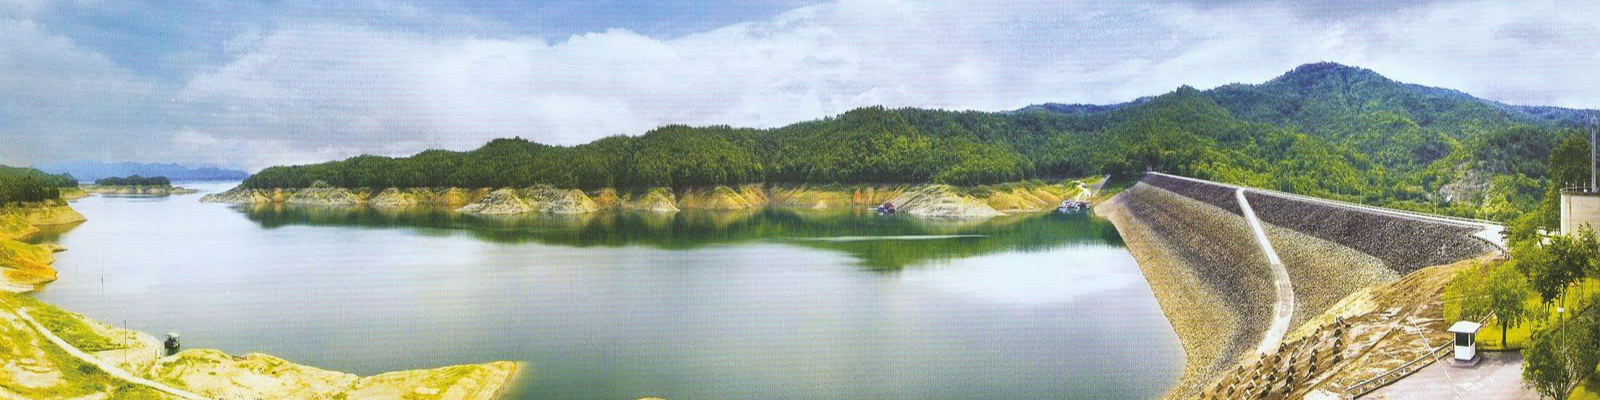 Sirikit Dam, Uttaradit Province